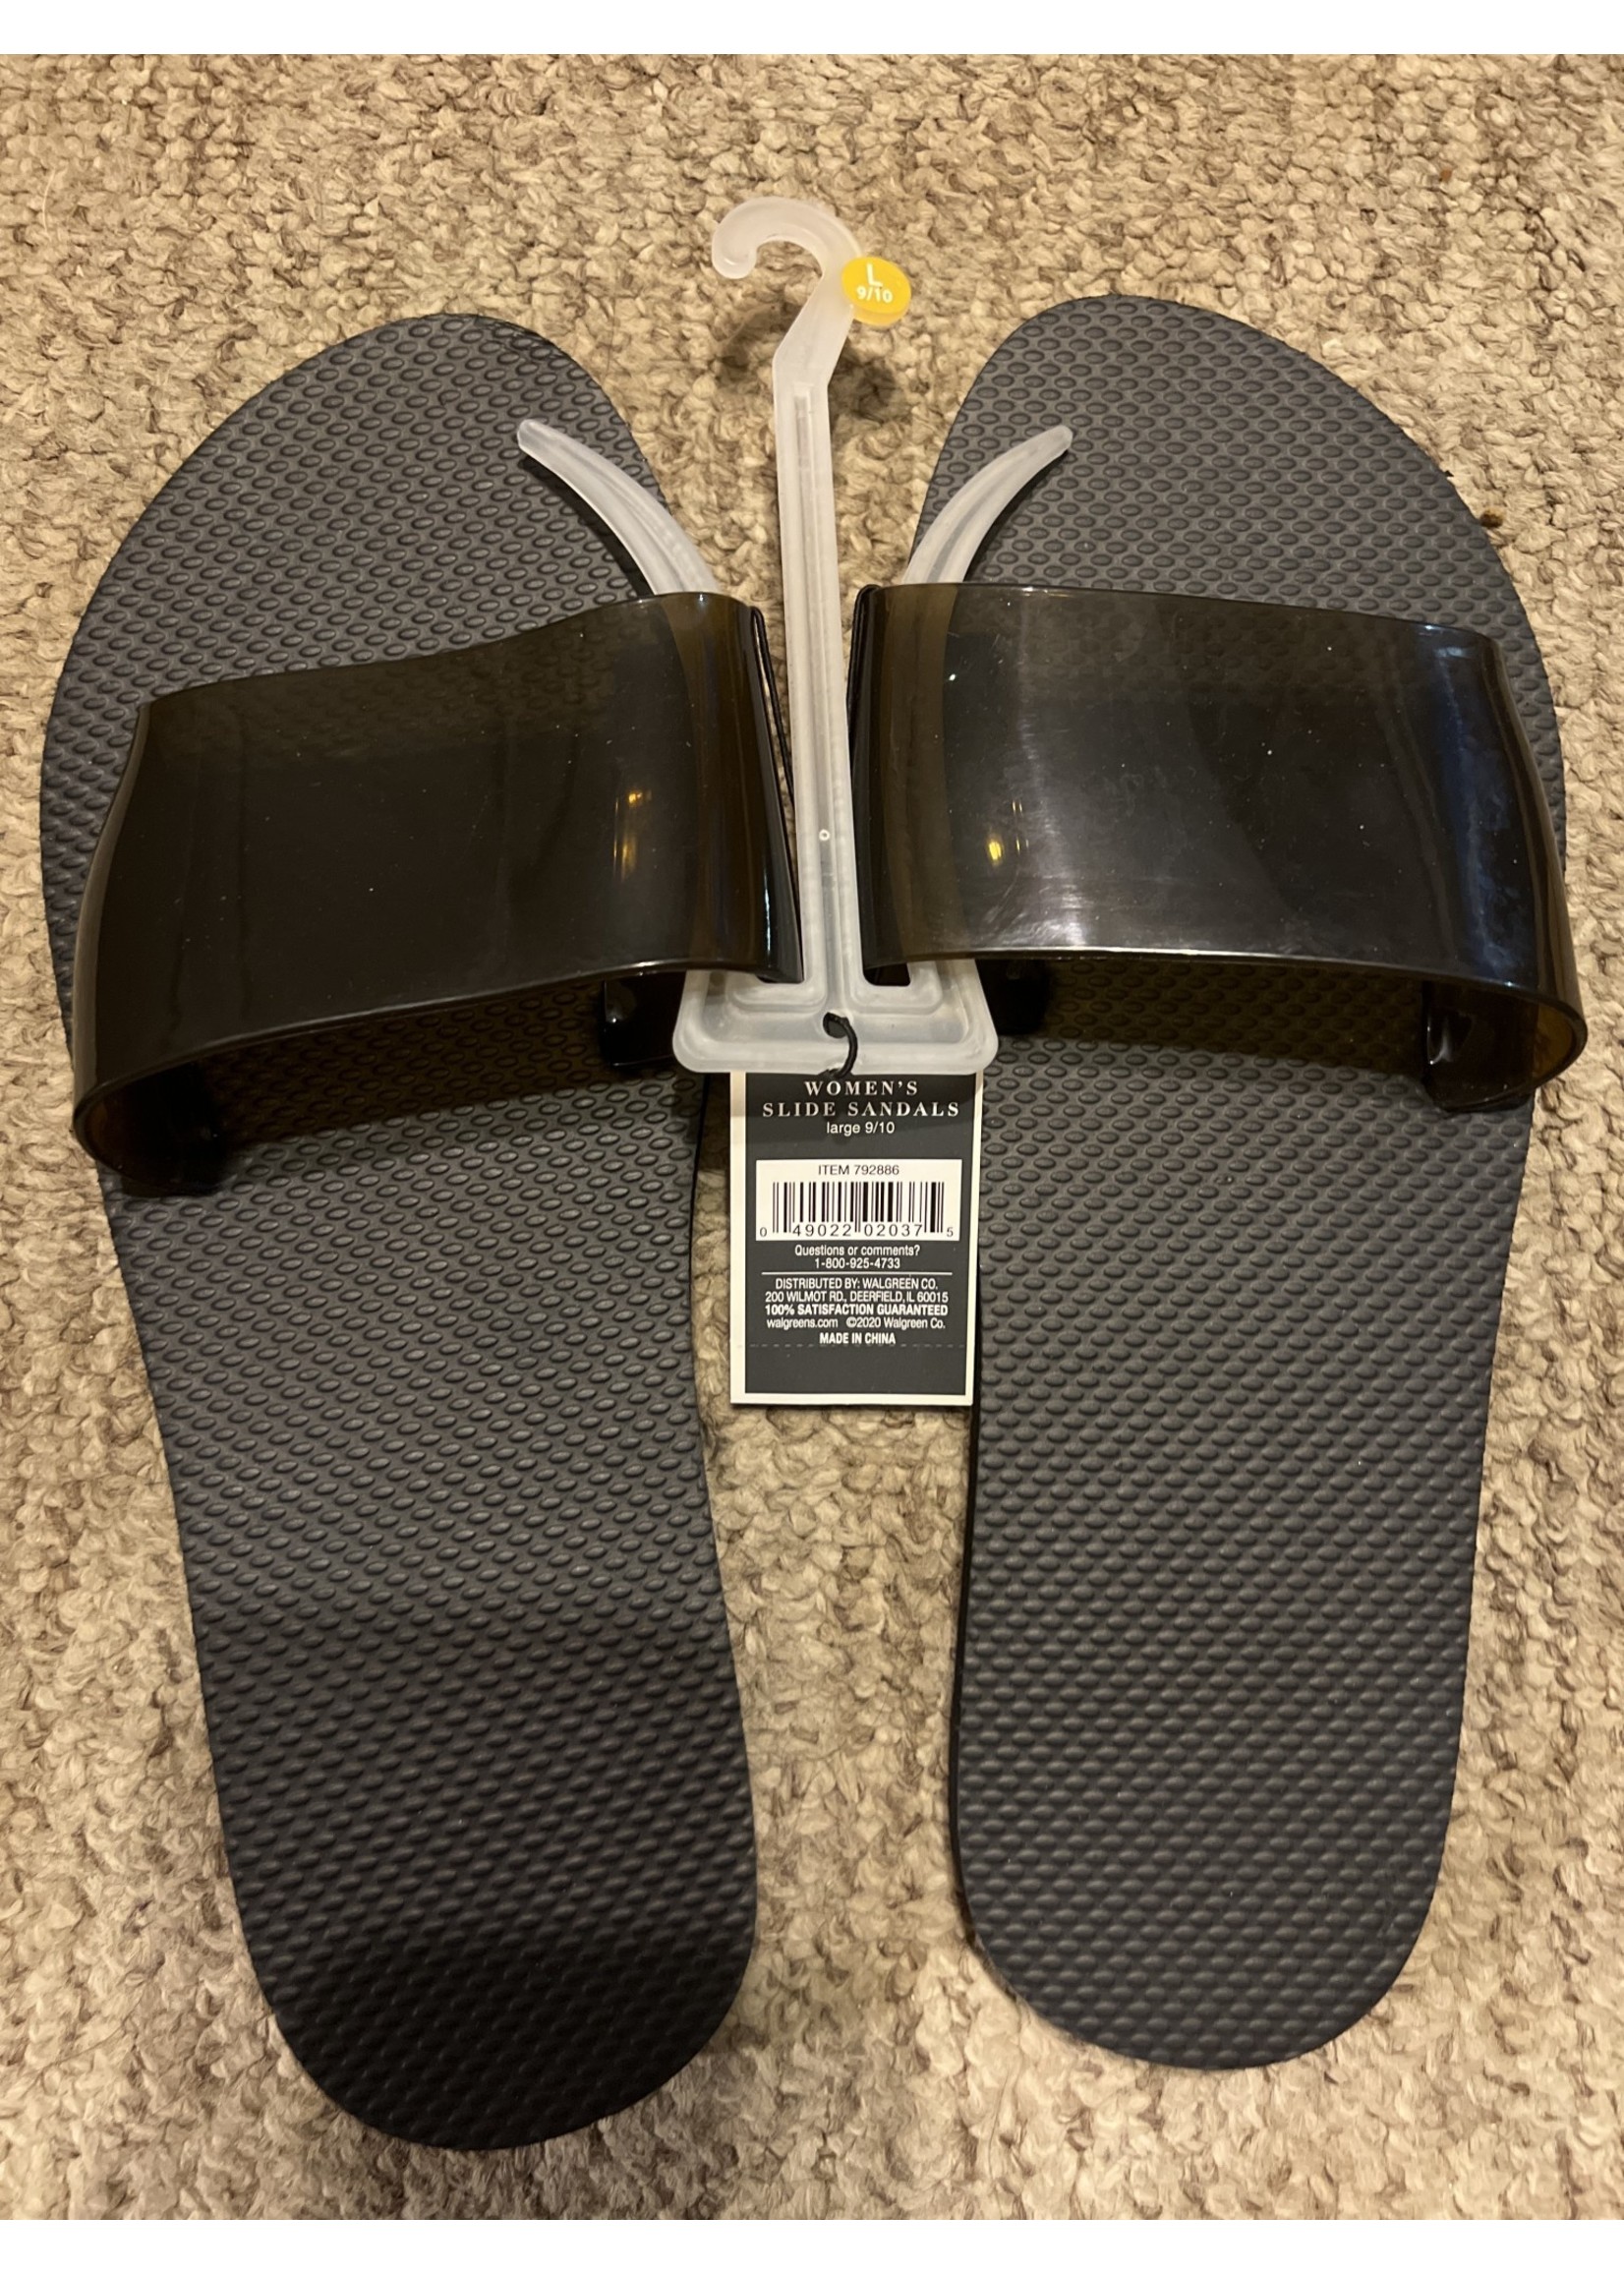 West loop Women’s Slide Sandals black L (9/10)